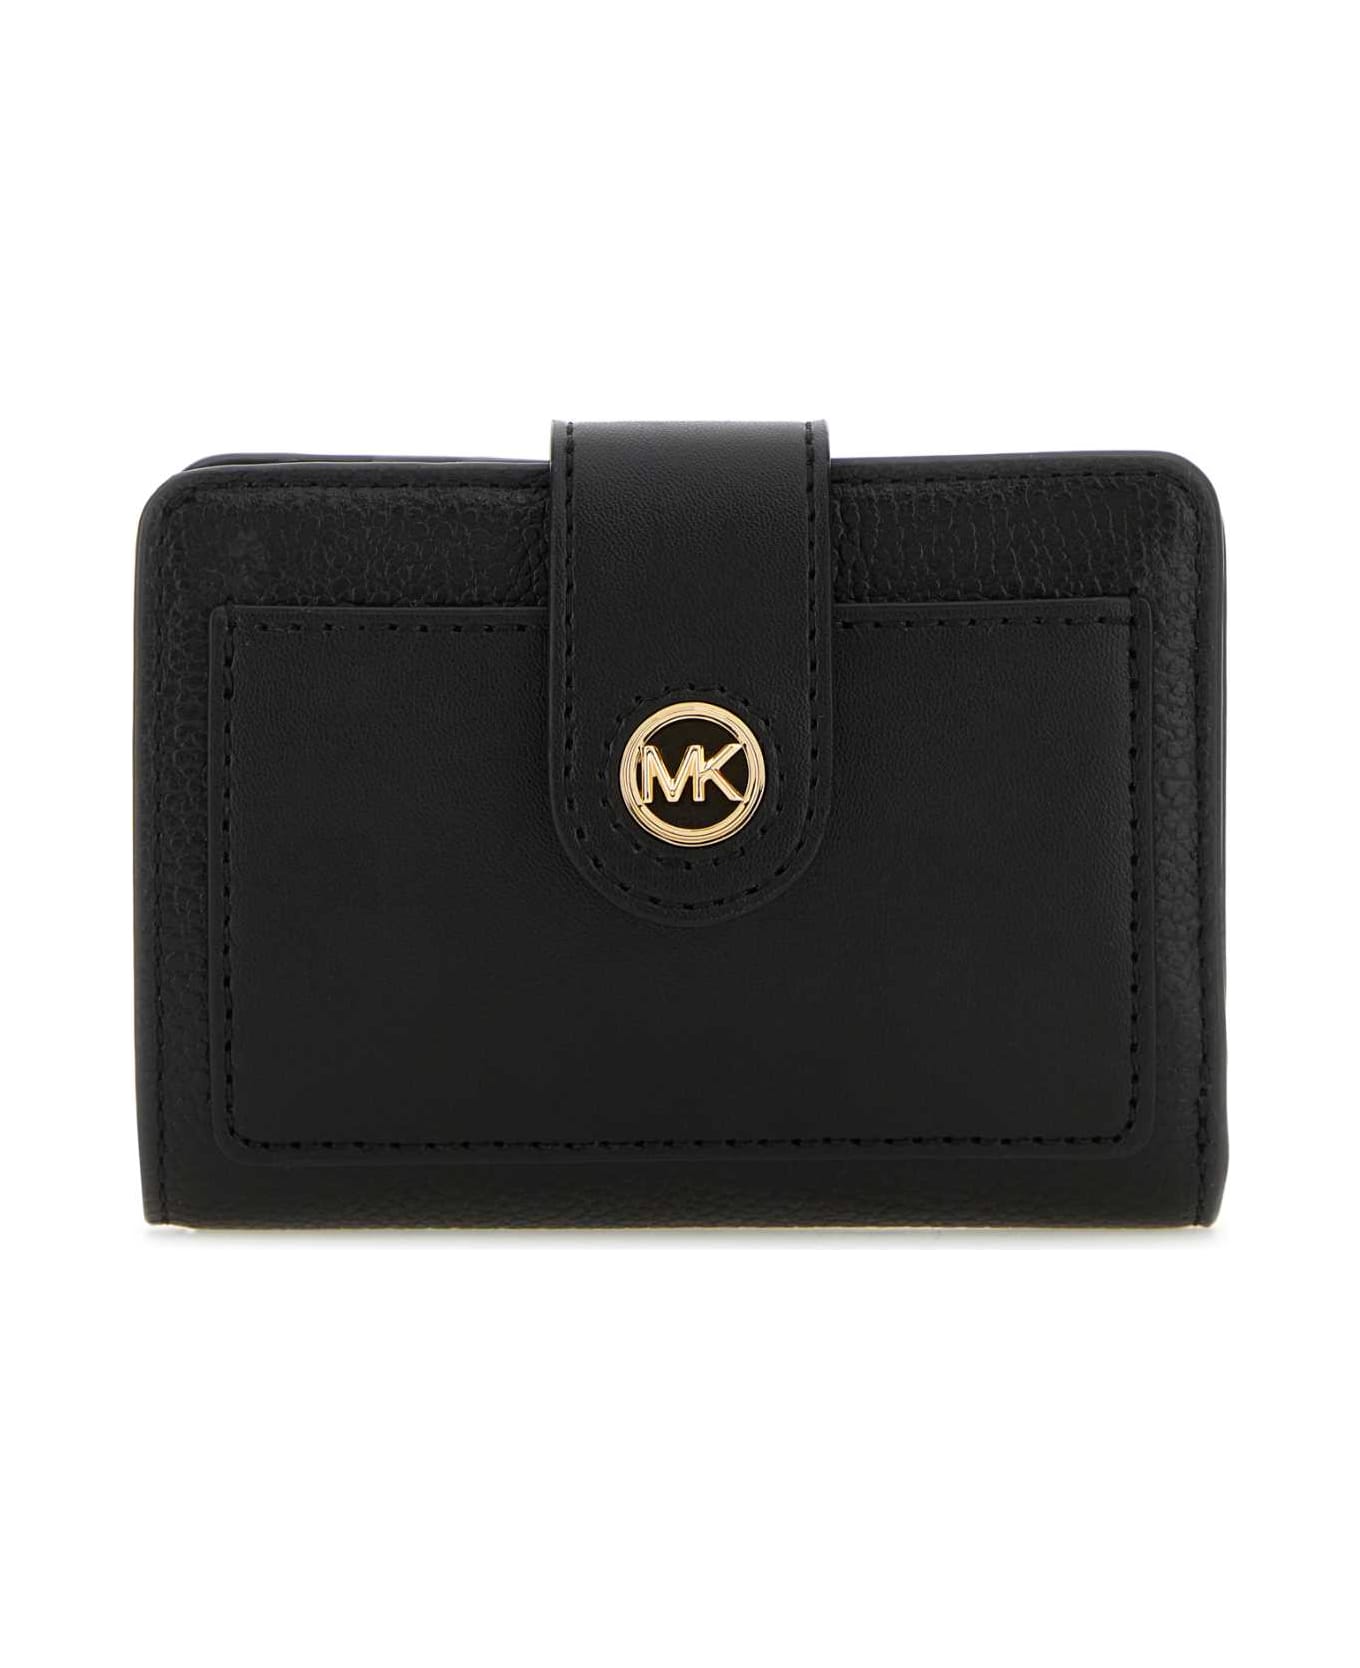 Michael Kors Black Leather Wallet - BLACK